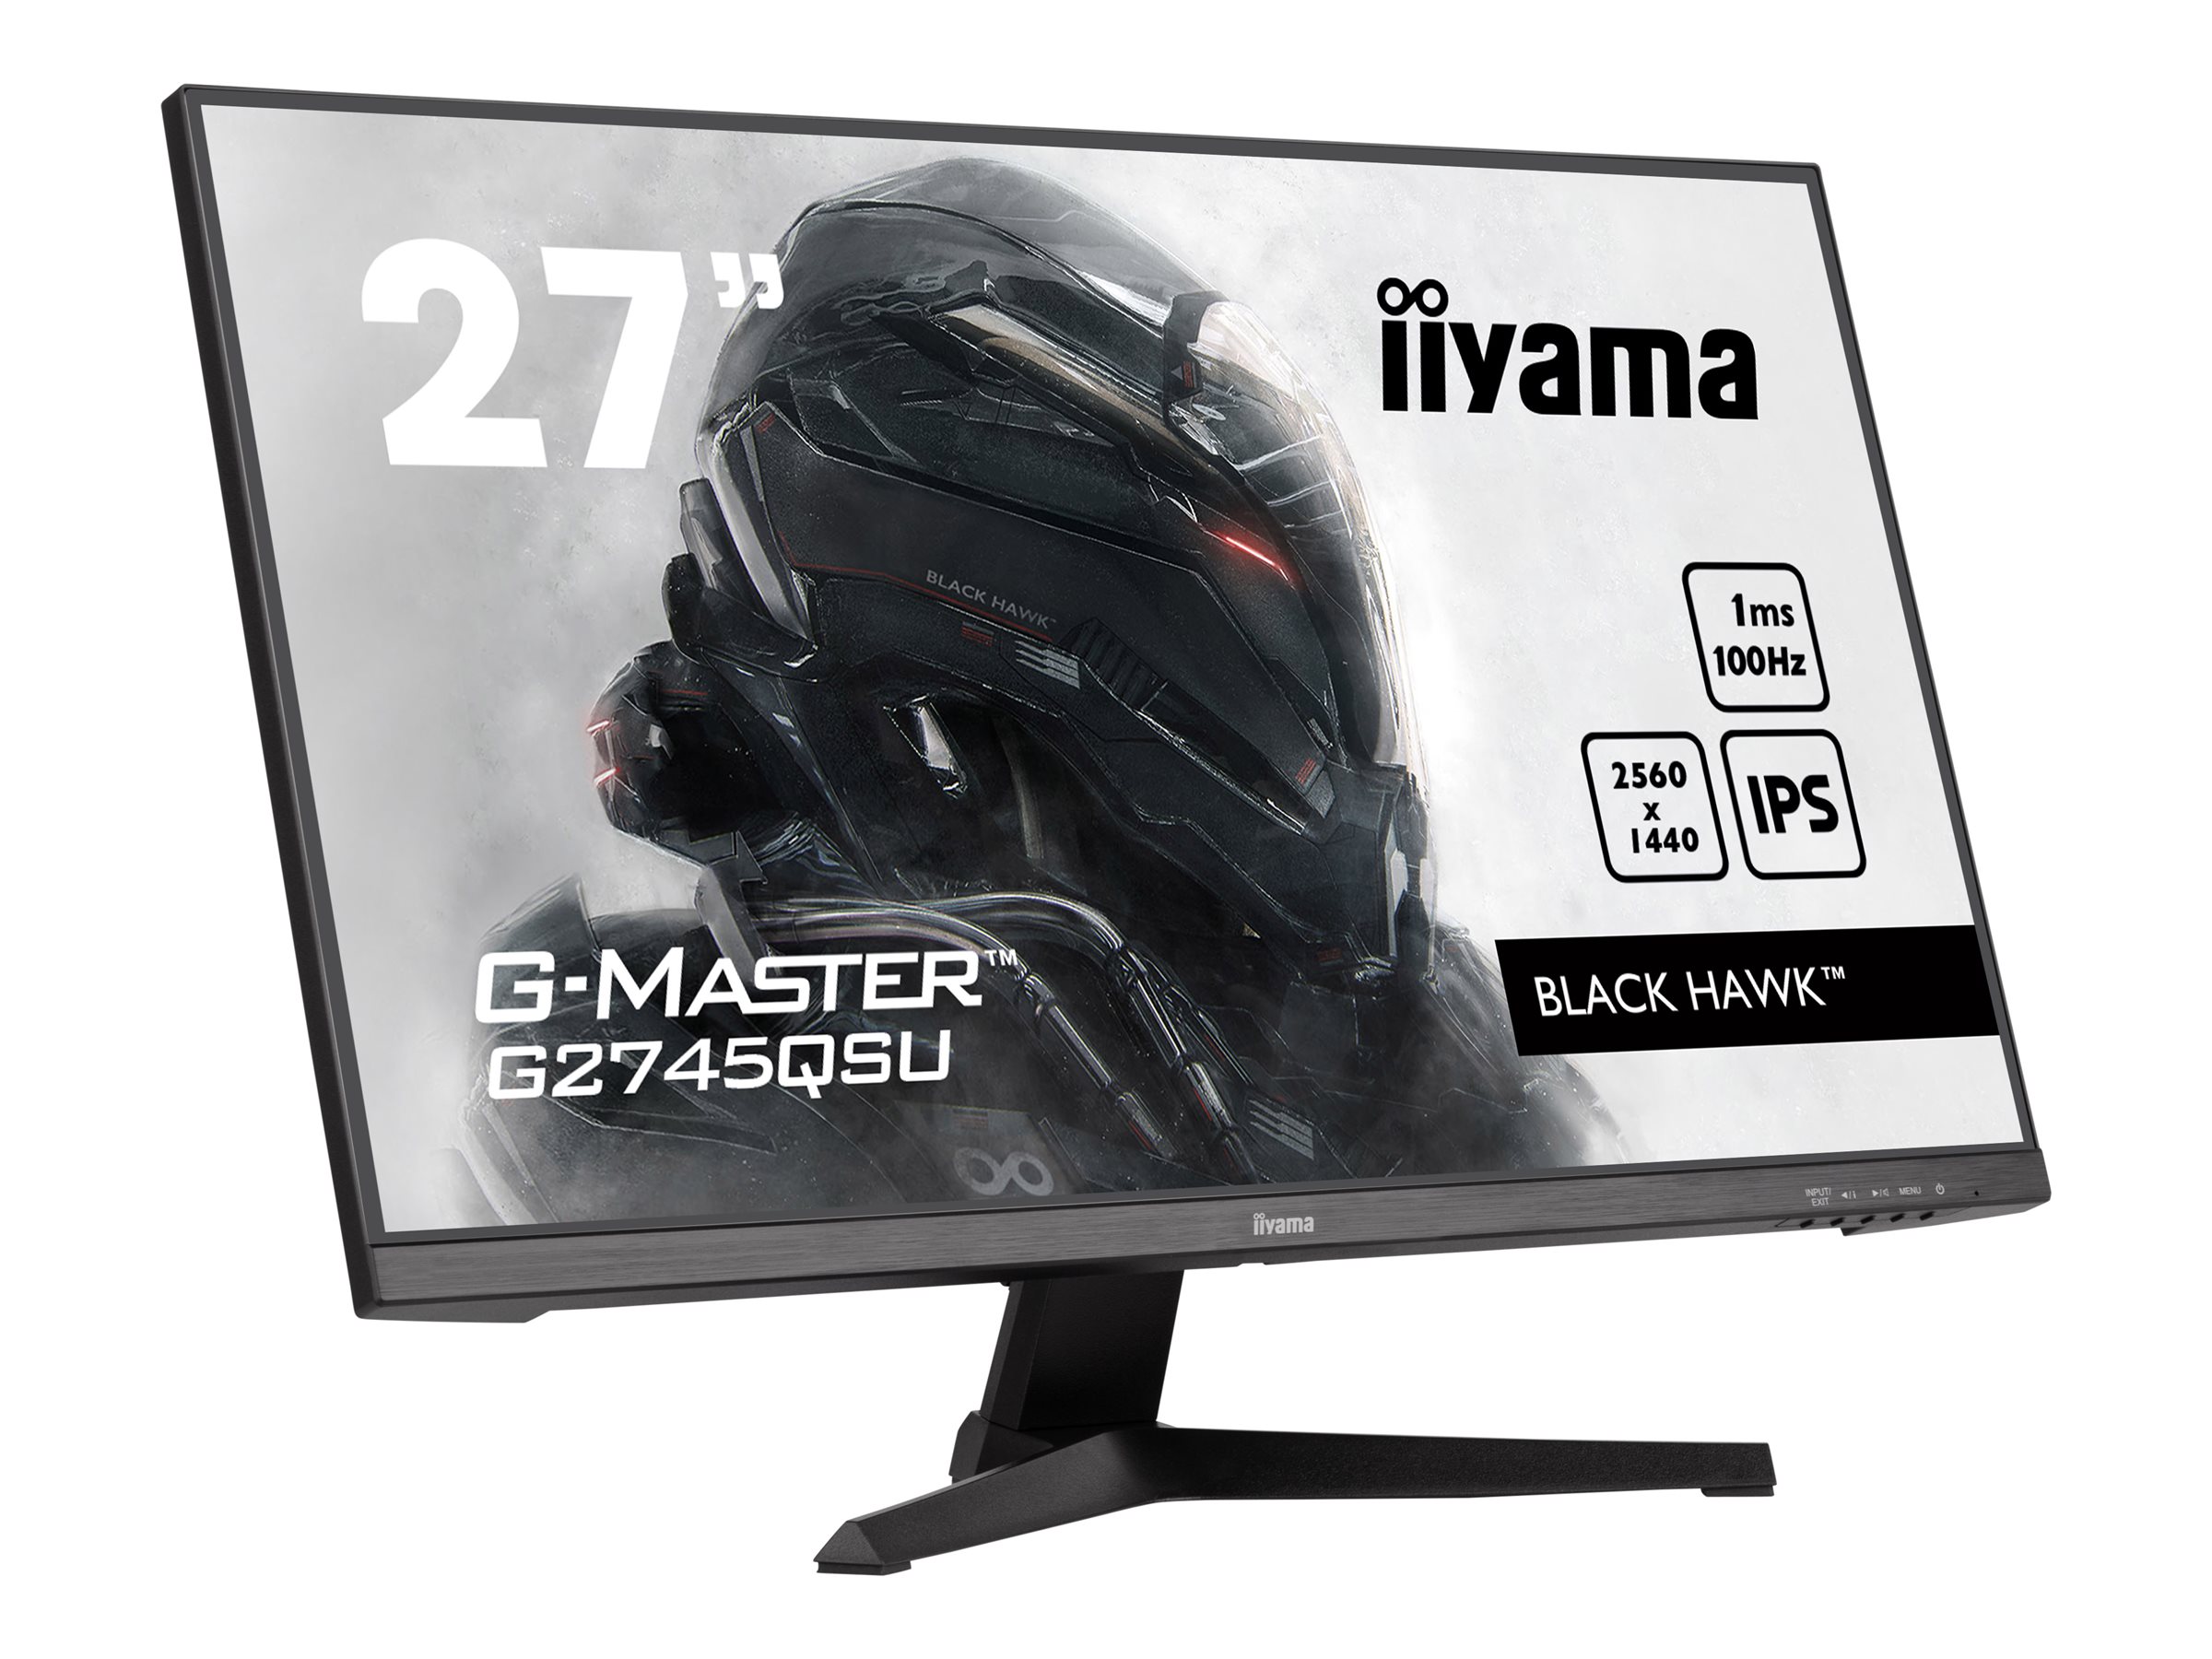 iiyama G-MASTER Black Hawk G2745QSU-B1 - Écran LED - 27" - 2560 x 1440 QHD @ 100 Hz - IPS - 250 cd/m² - 1300:1 - 1 ms - HDMI, DisplayPort - haut-parleurs - noir mat - G2745QSU-B1 - Écrans d'ordinateur